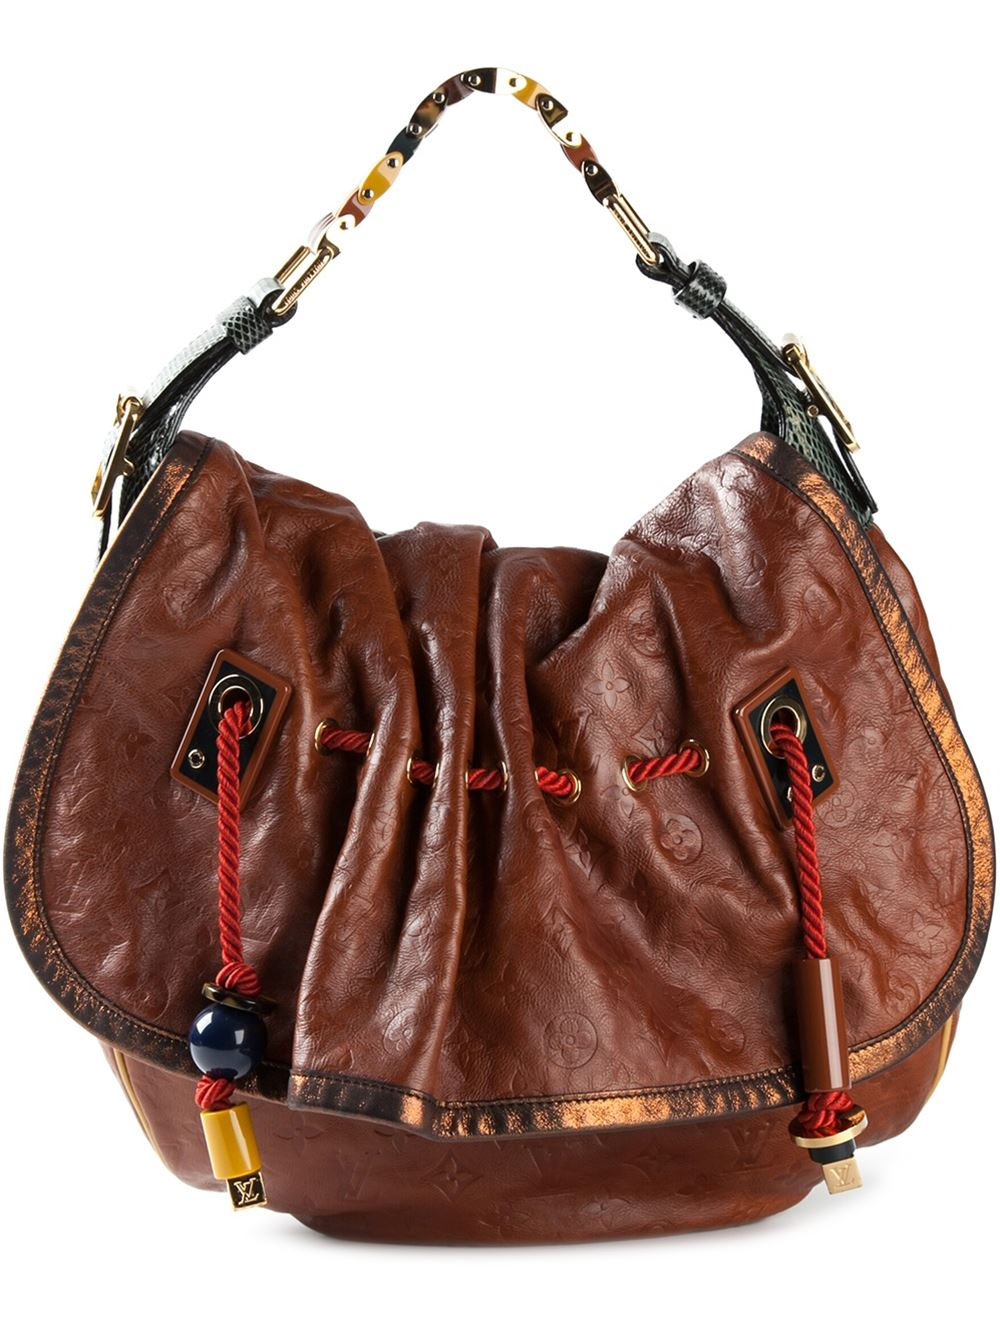 Lyst - Louis Vuitton Hobo Shoulder Bag in Brown